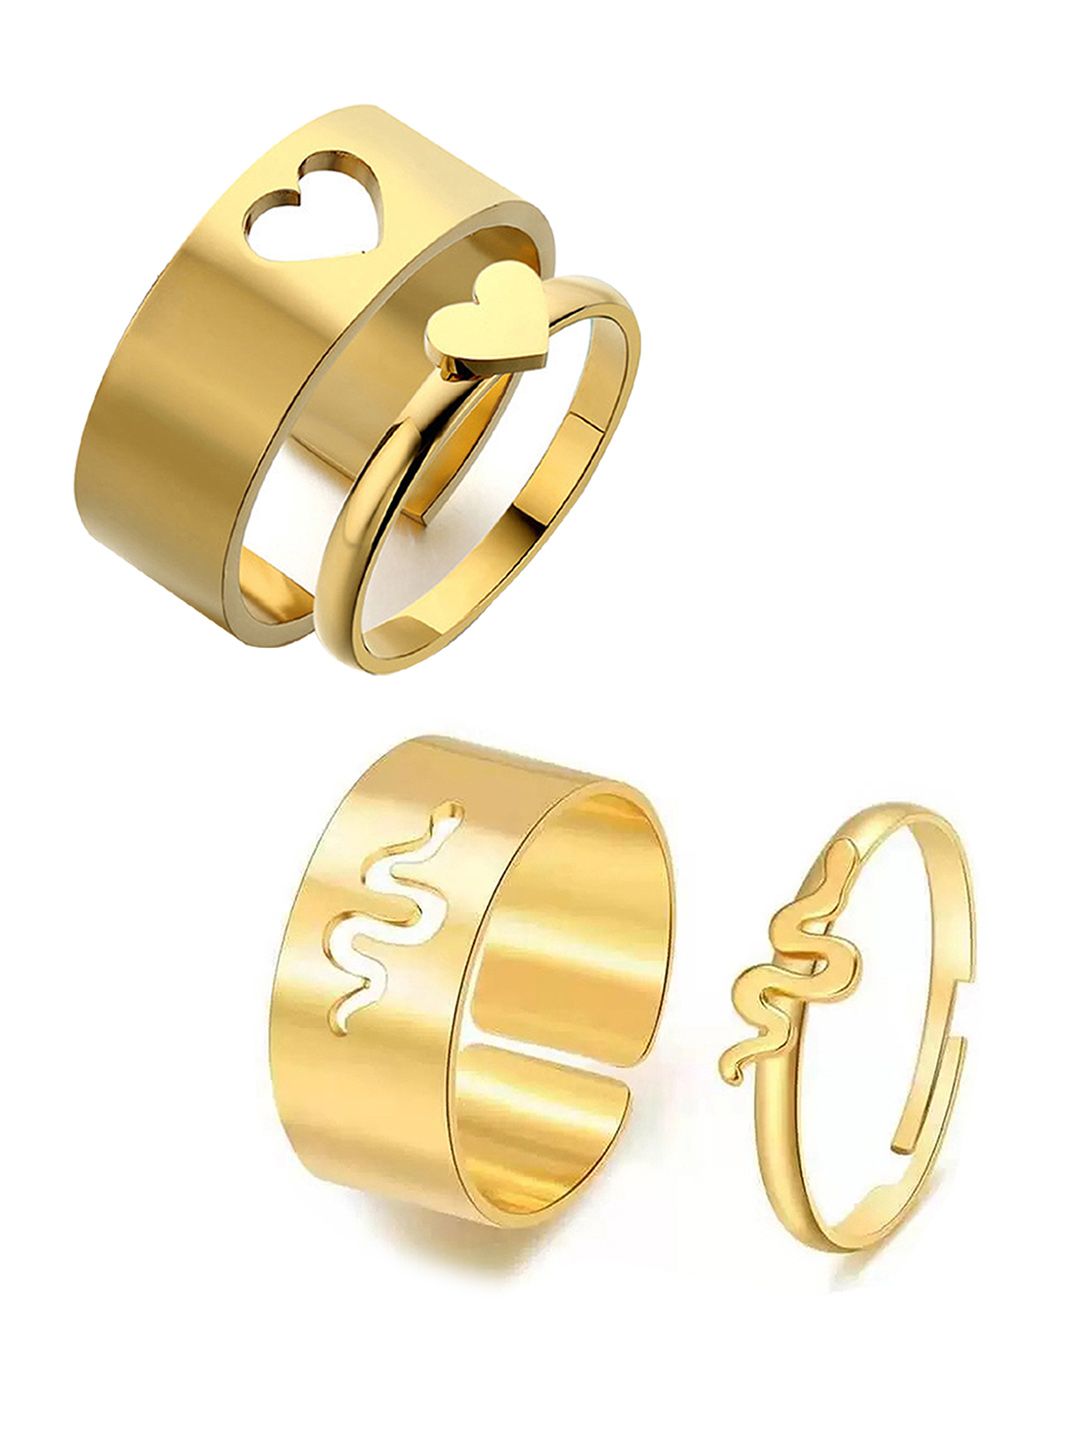 Vembley Set Of 4 Gold-Plated Snake & Heart Design Adjustable Finger Ring Price in India